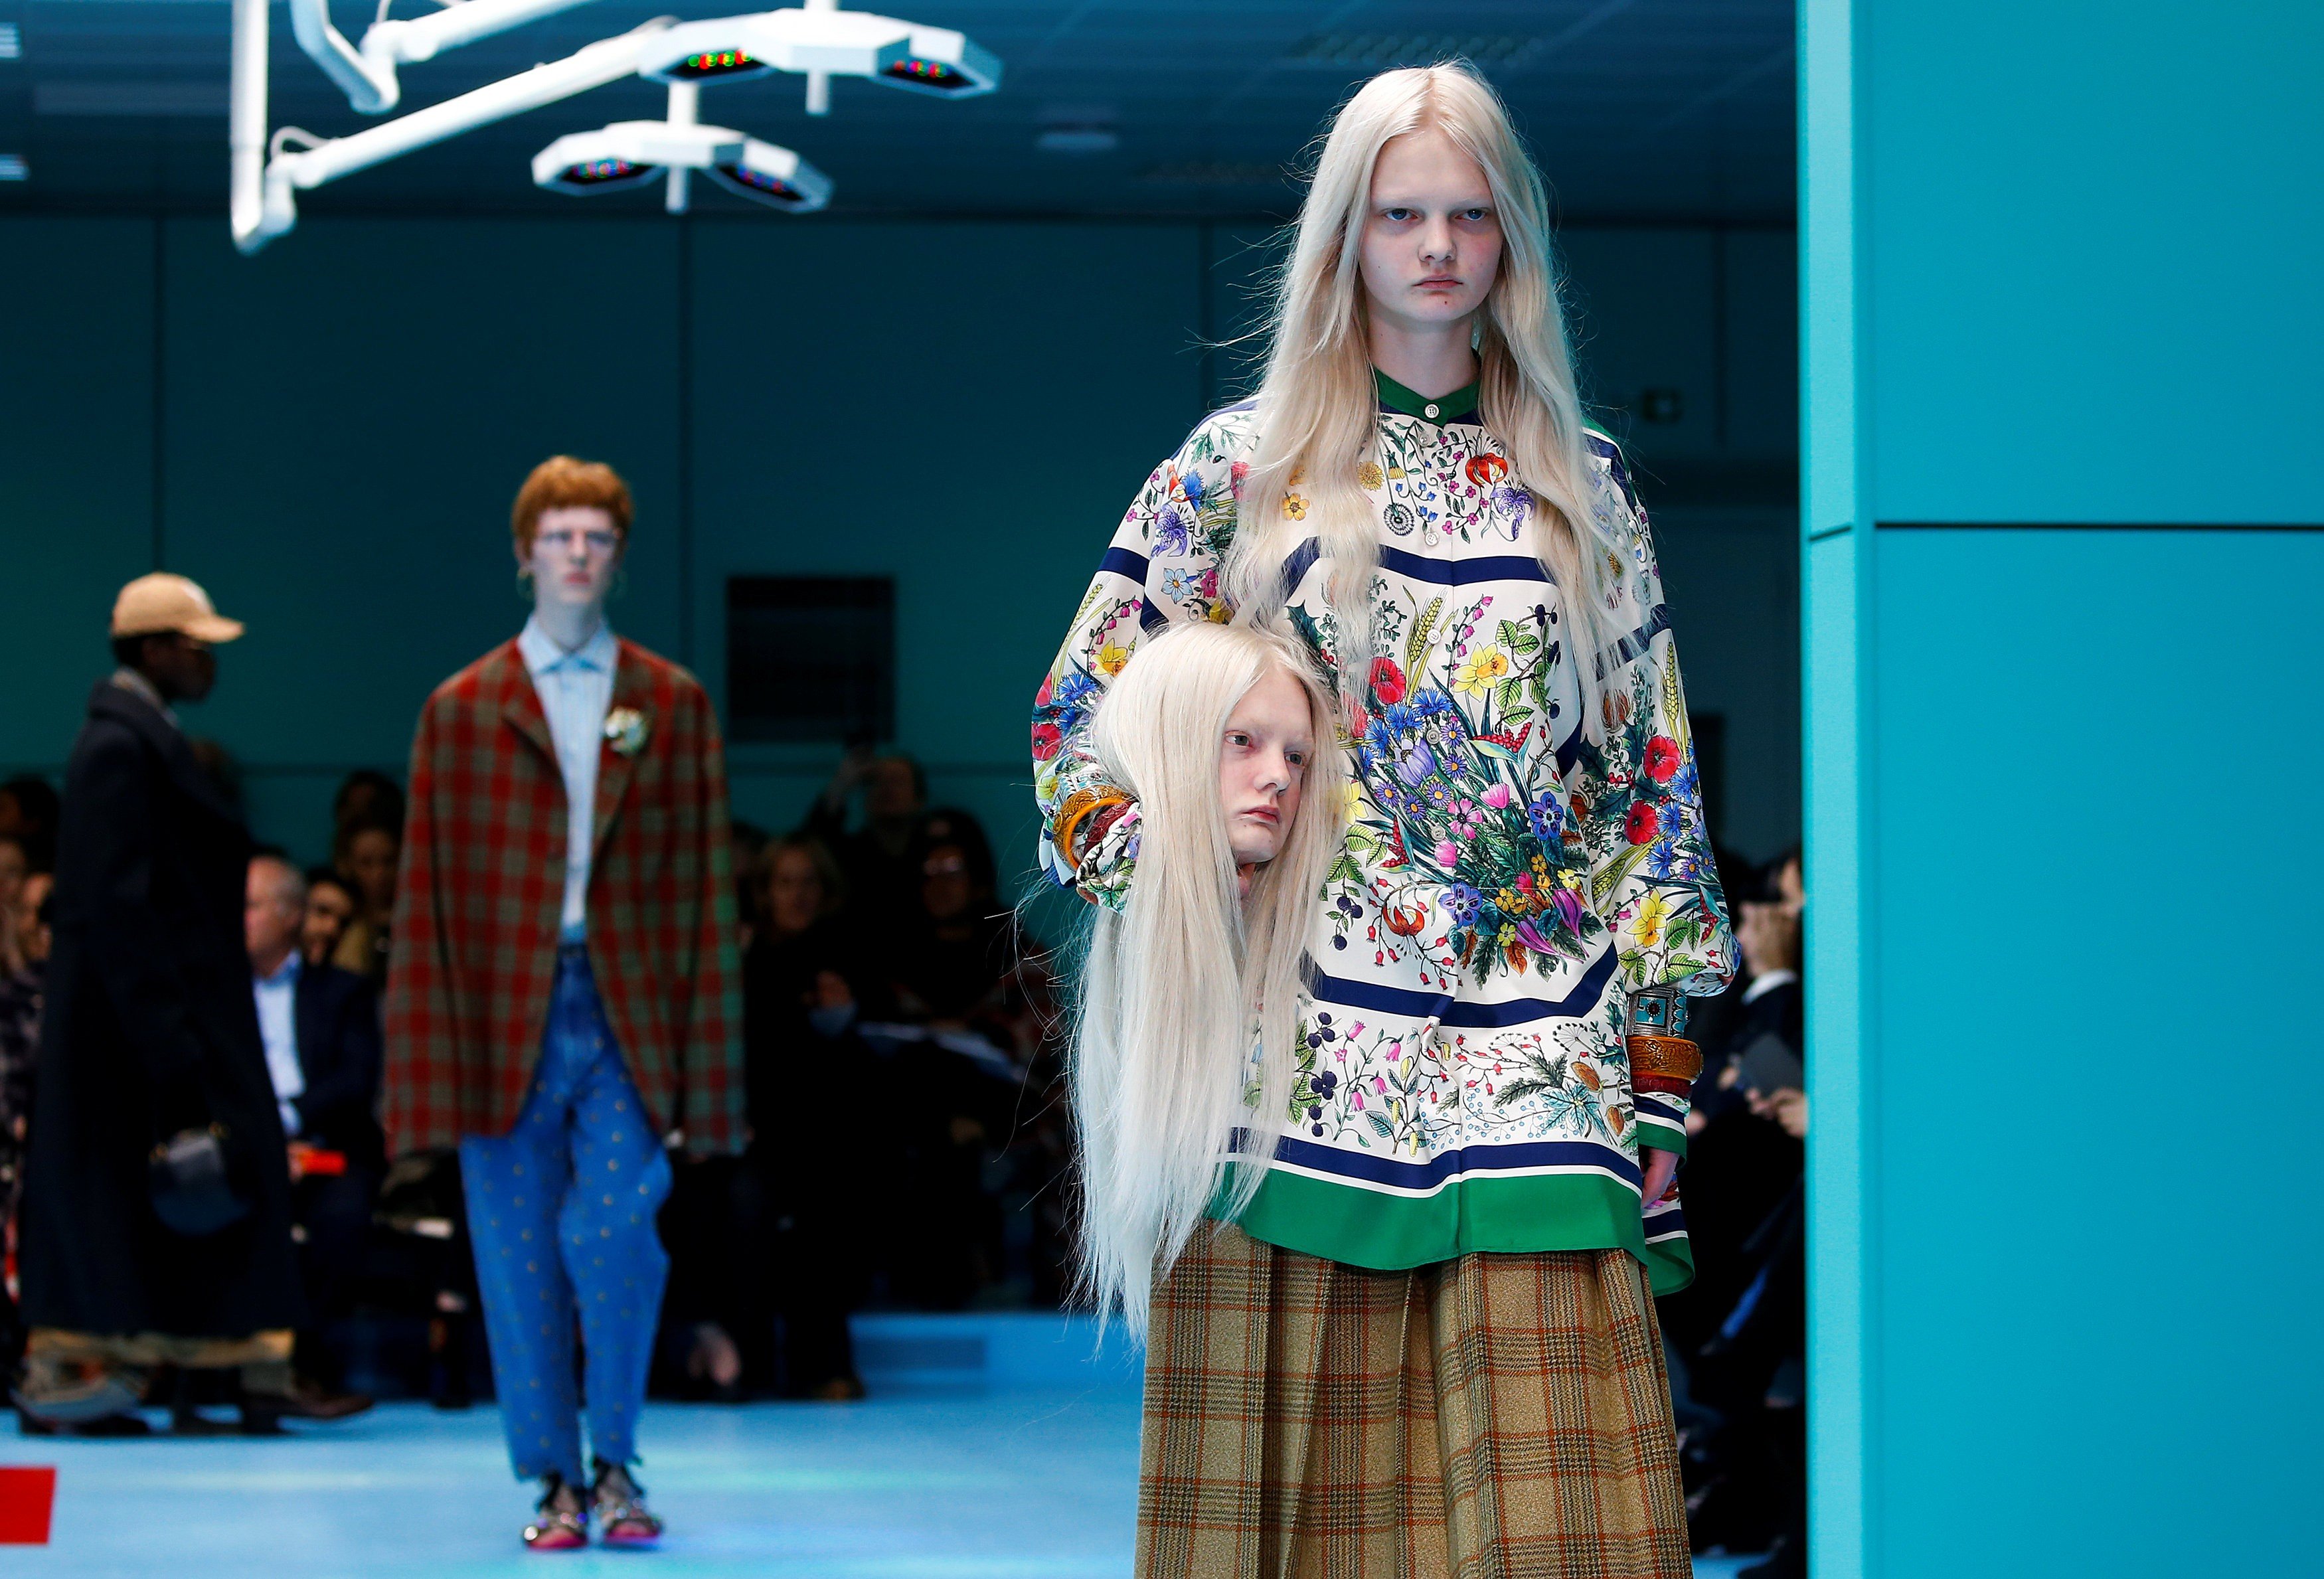 Milan Fashion Week: Gucci creates buzz 